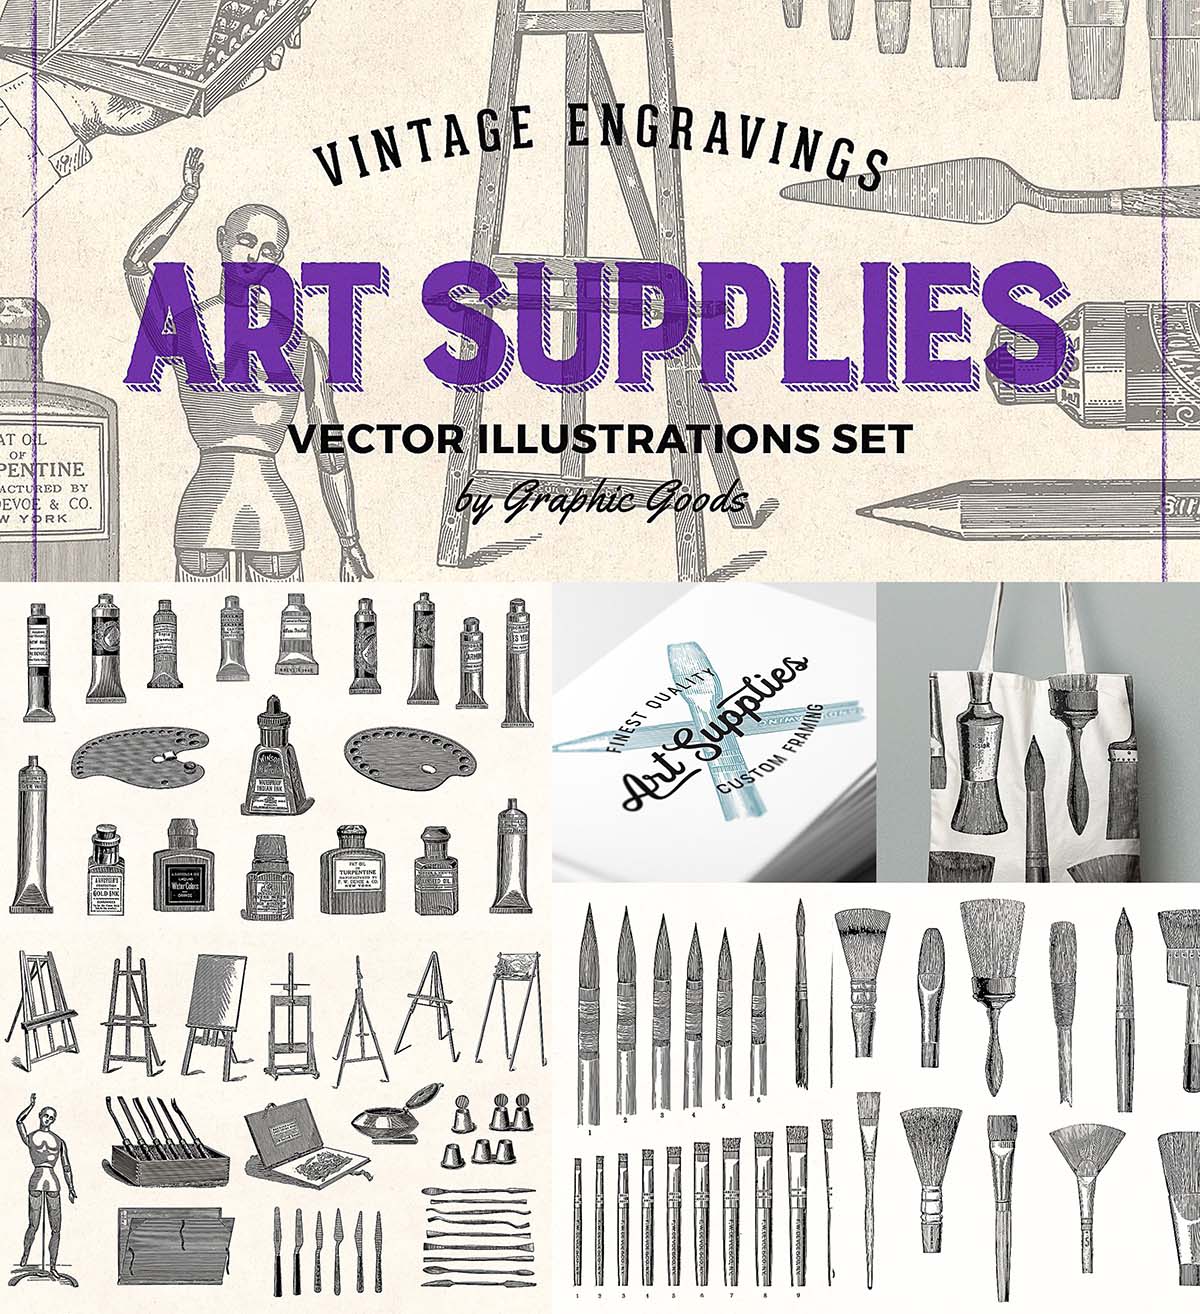 5 Ways to Get Free Art Supplies - Free Vintage Illustrations